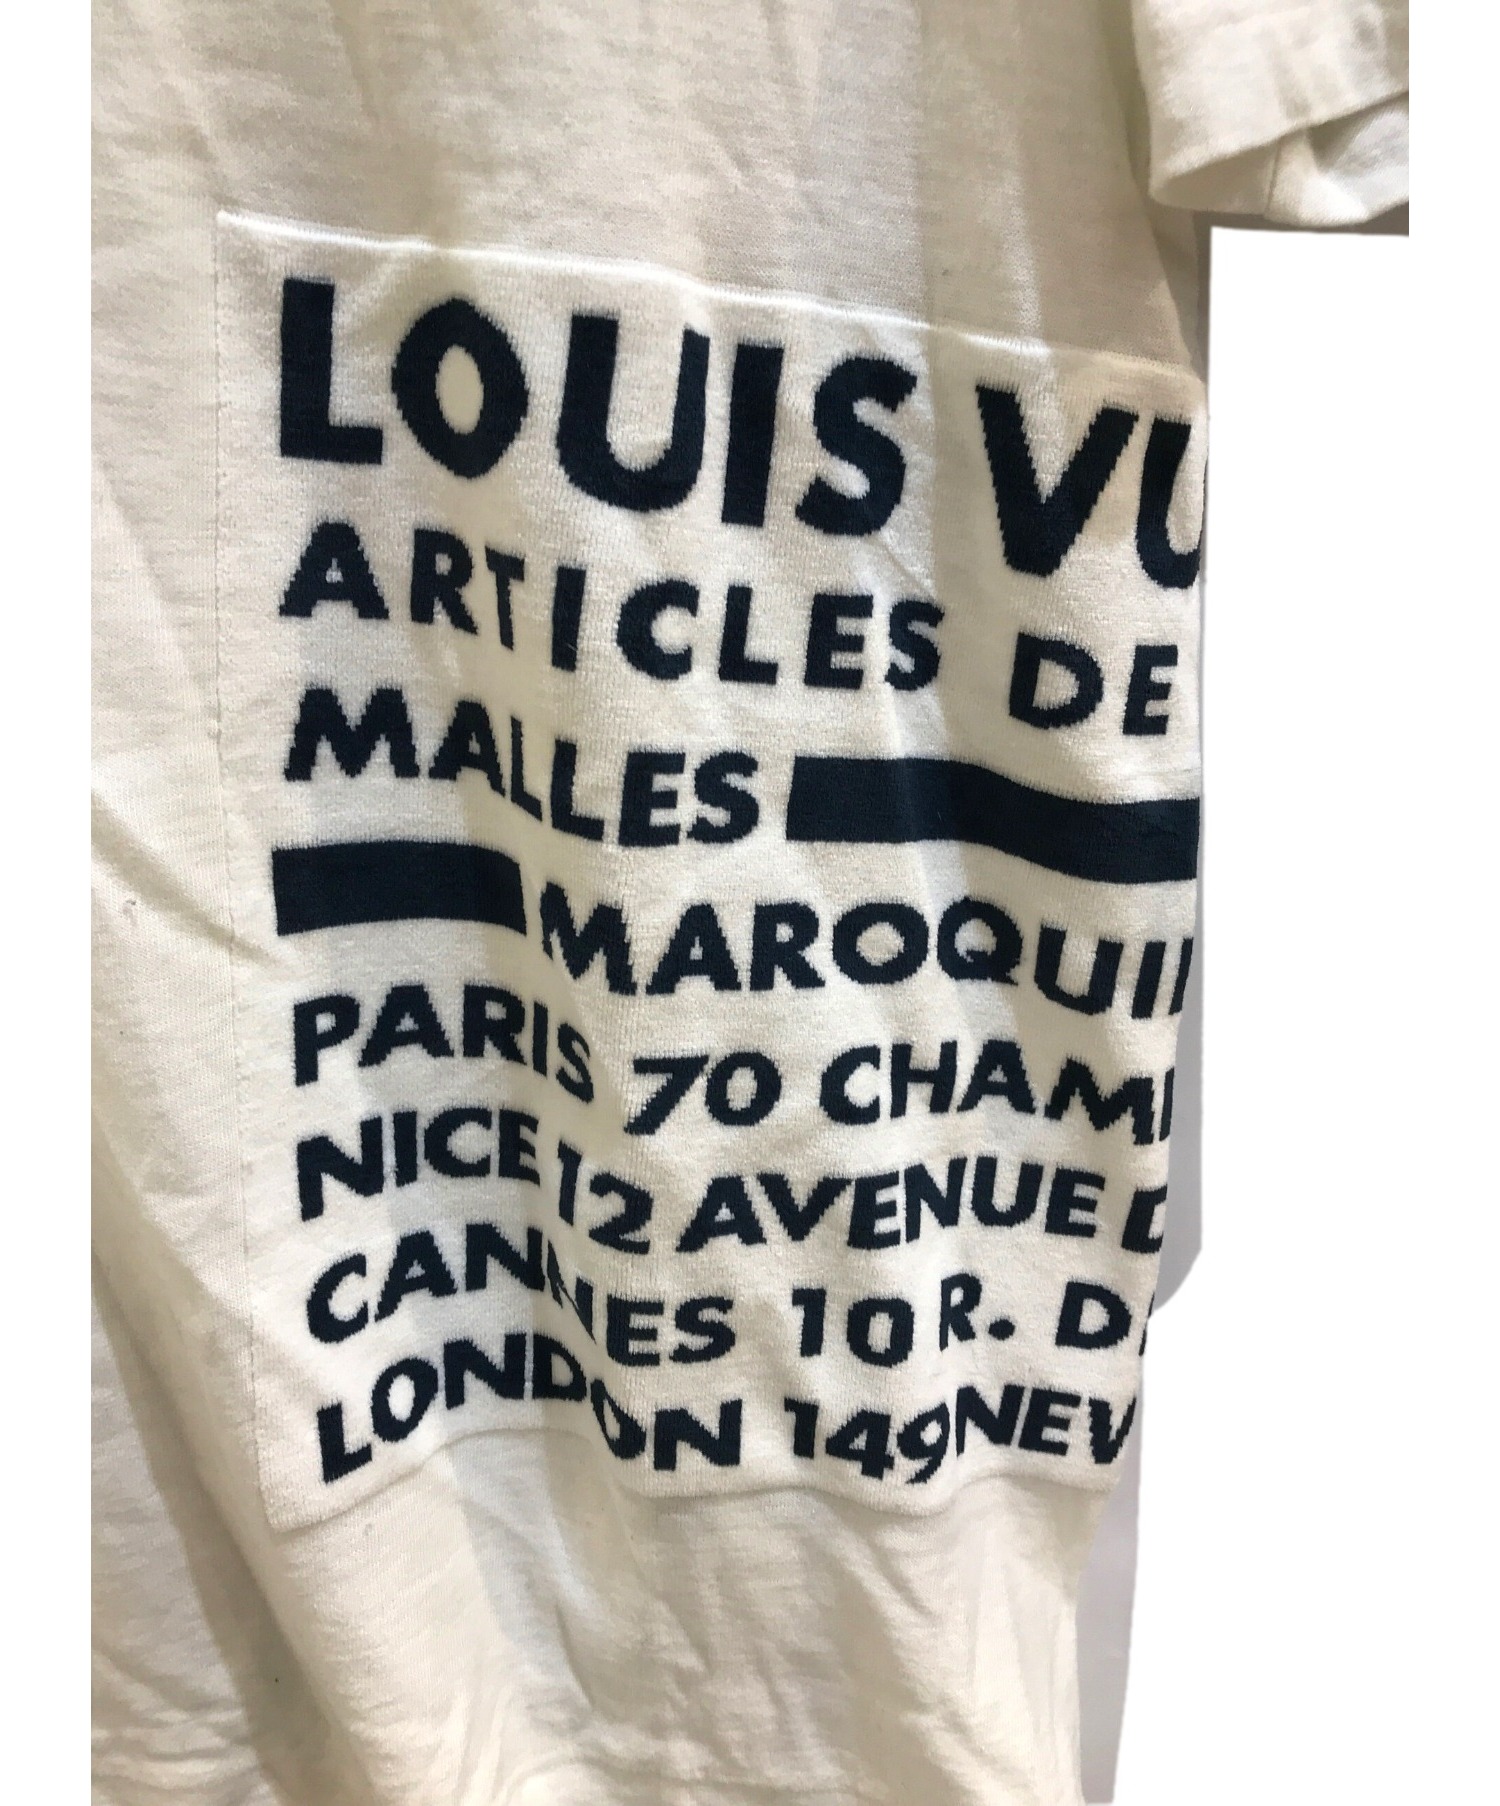 LOUIS VUITTON (ルイ ヴィトン) メッセージTシャツ ホワイト サイズ:S 16AW 「ARTICLES DE VOYAGE  MALLES」 キム・ジョーンズ監修